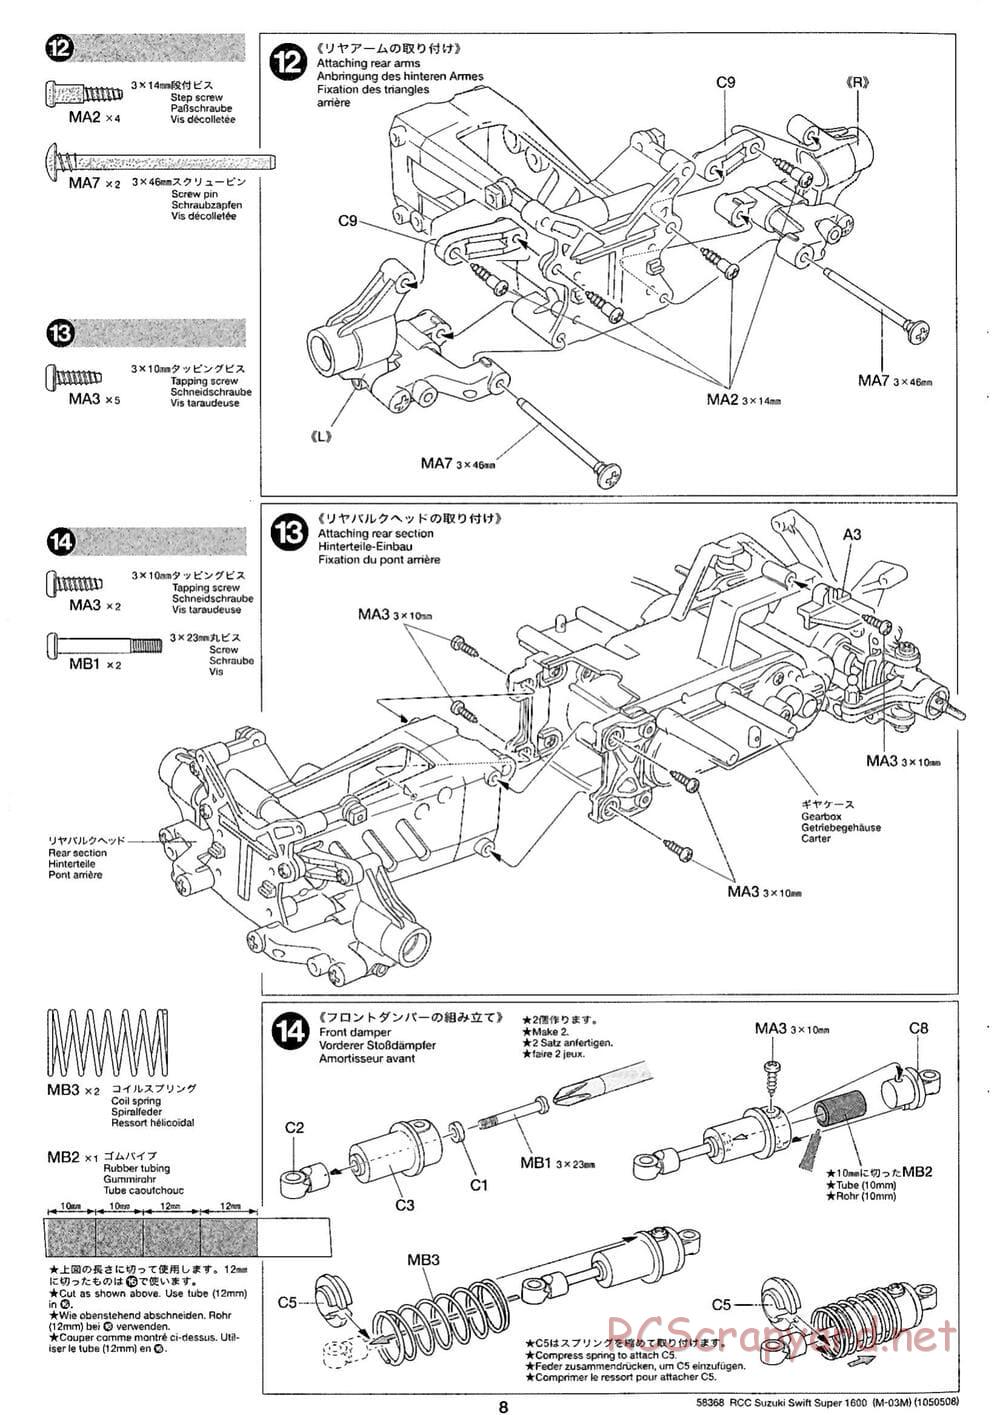 Tamiya - Suzuki Swift Super 1600 - M03M Chassis - Manual - Page 8